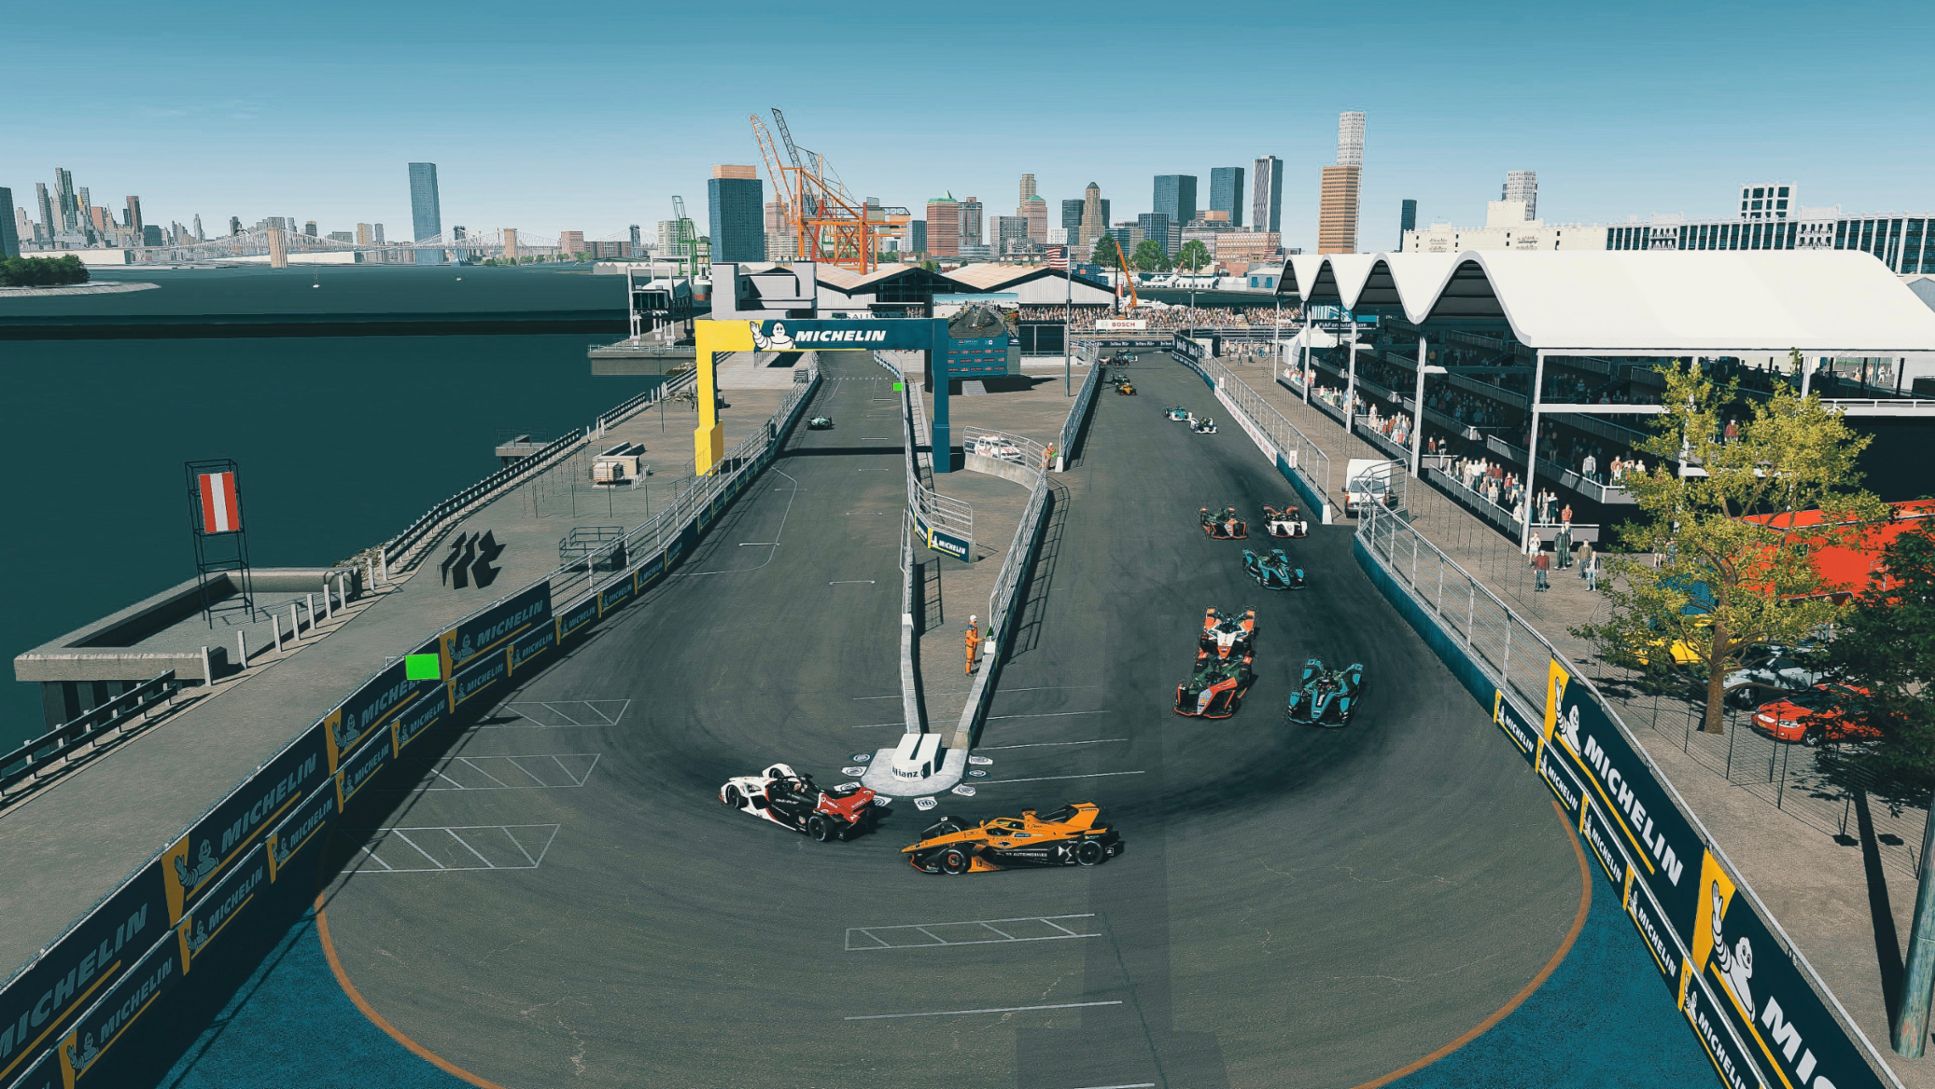 99X Electric, ABB FIA Formula E Championship, Race at Home Challenge, race 6, New York, 2020, Porsche AG